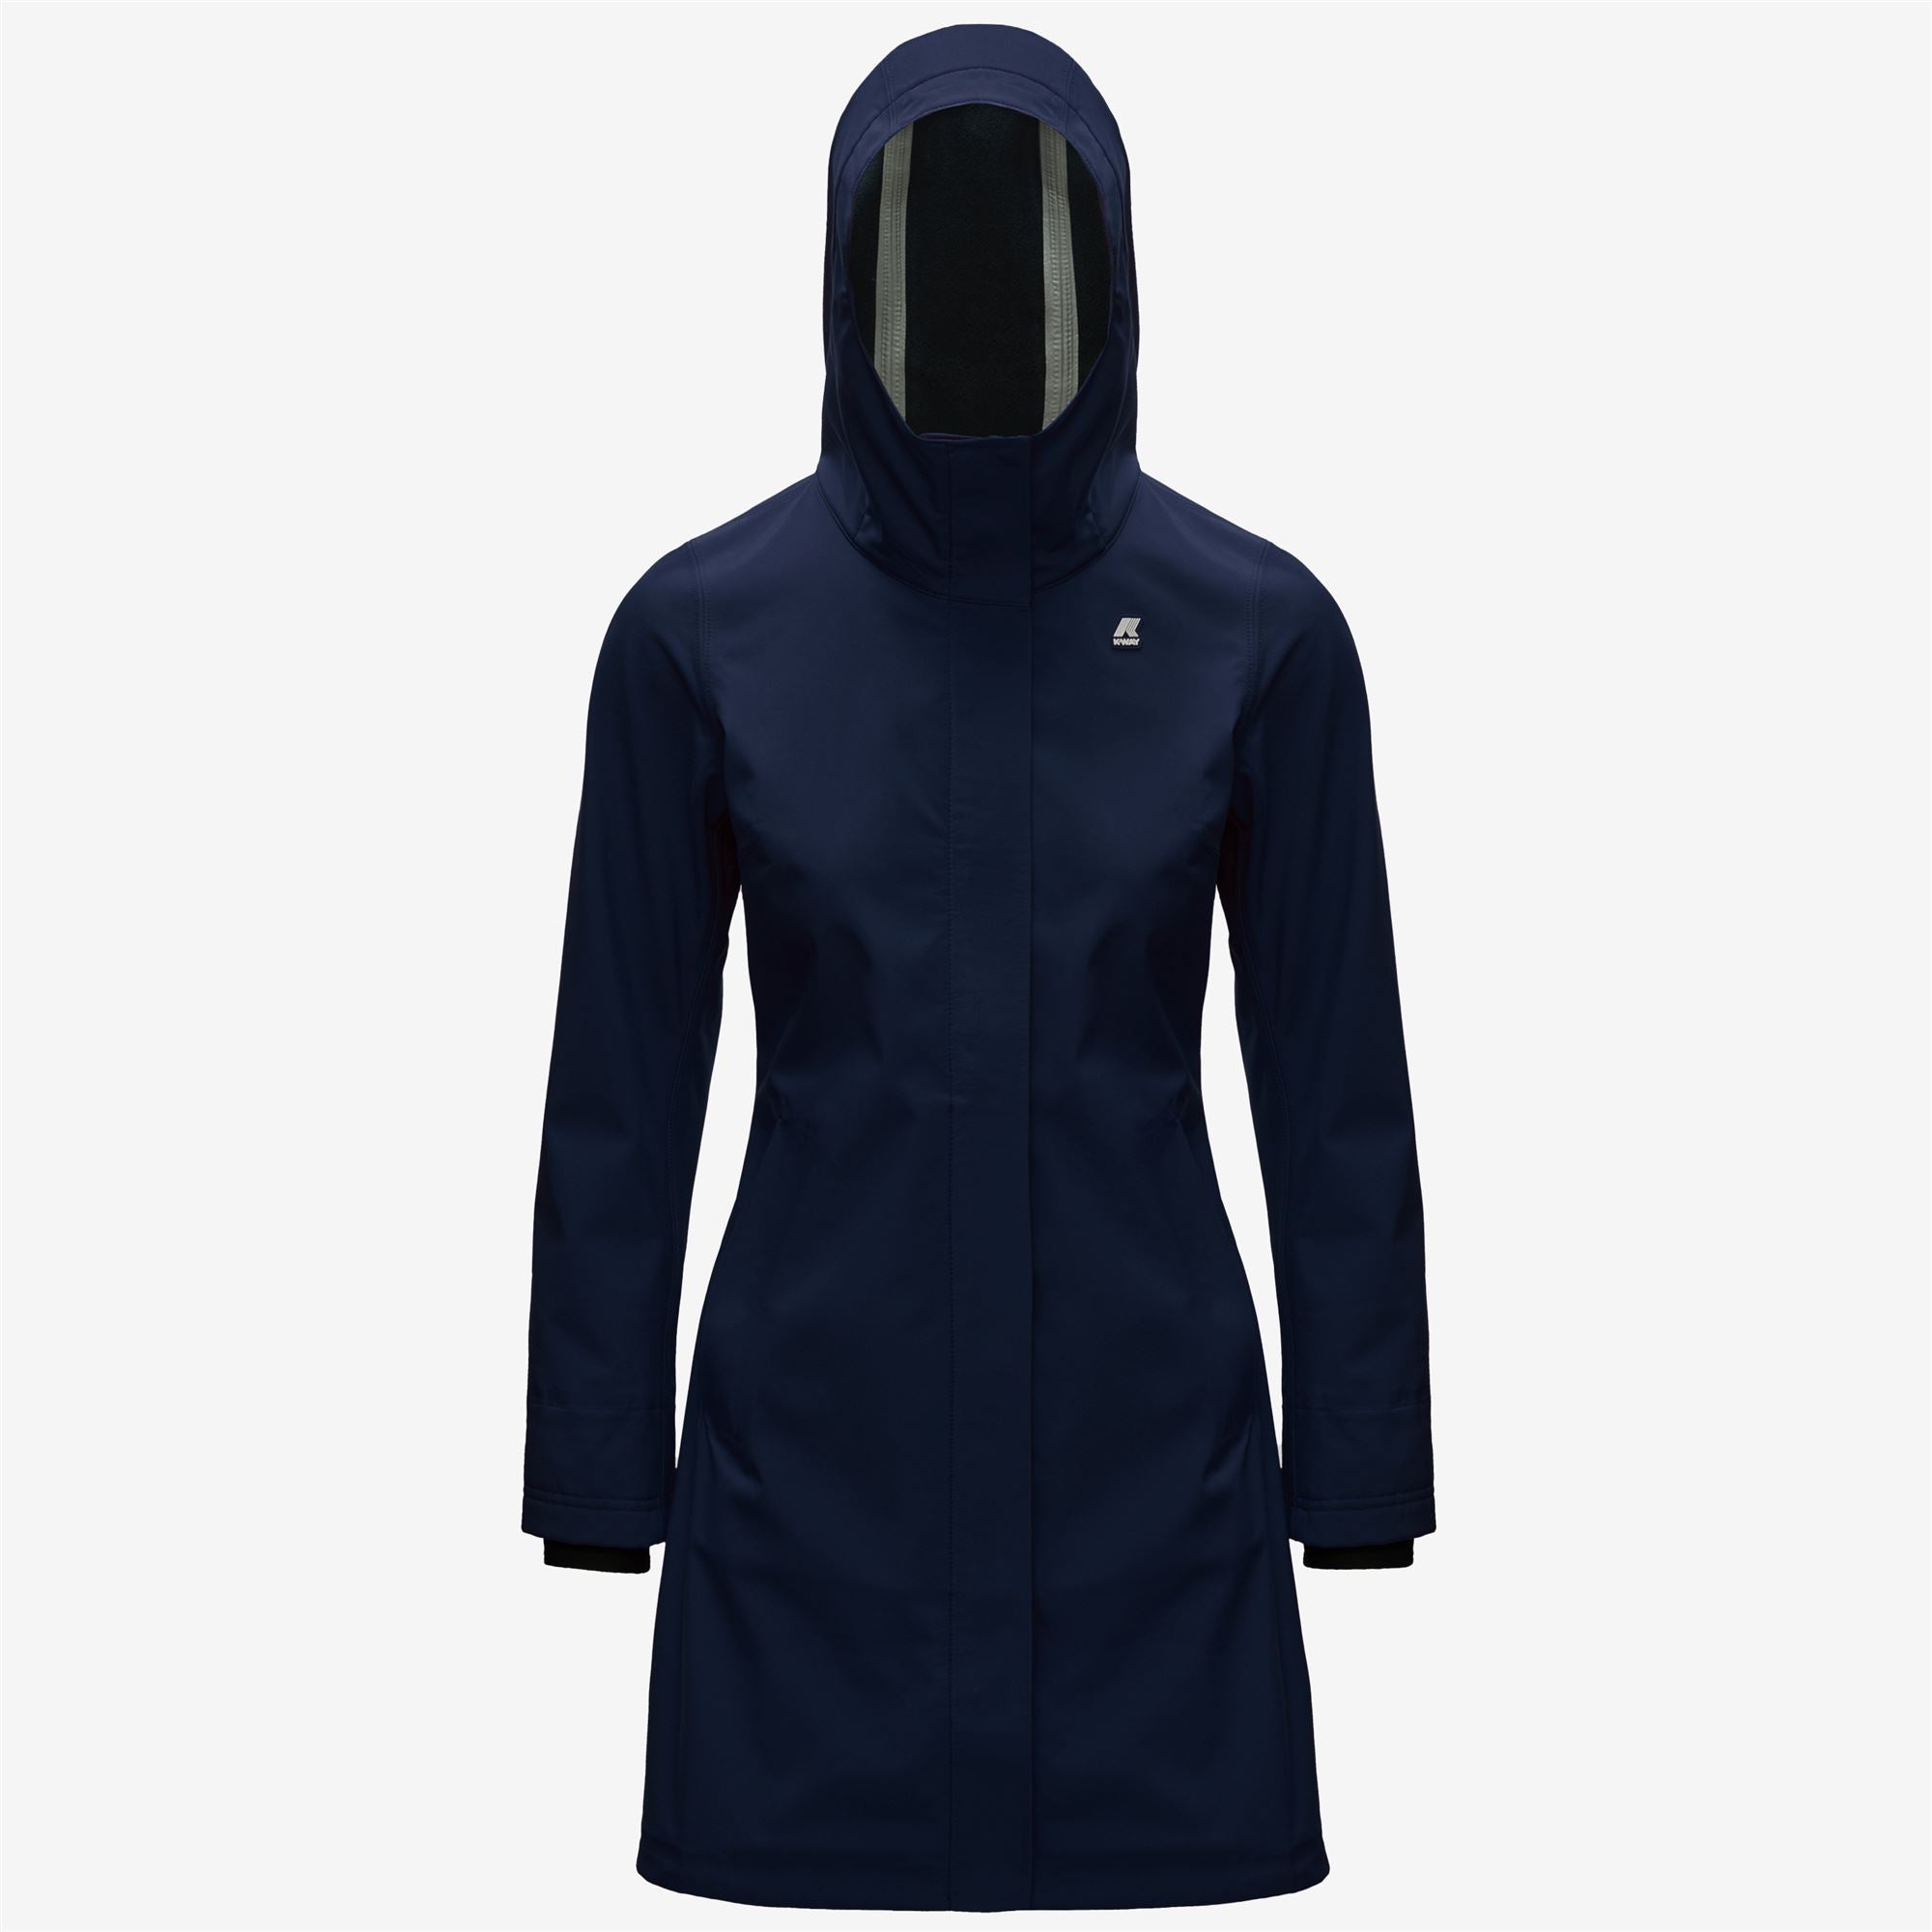 Jackets Woman STEPHY BONDED 3/4 Length BLUE DEPTH - BLUE DEPTHS – K-Way.com